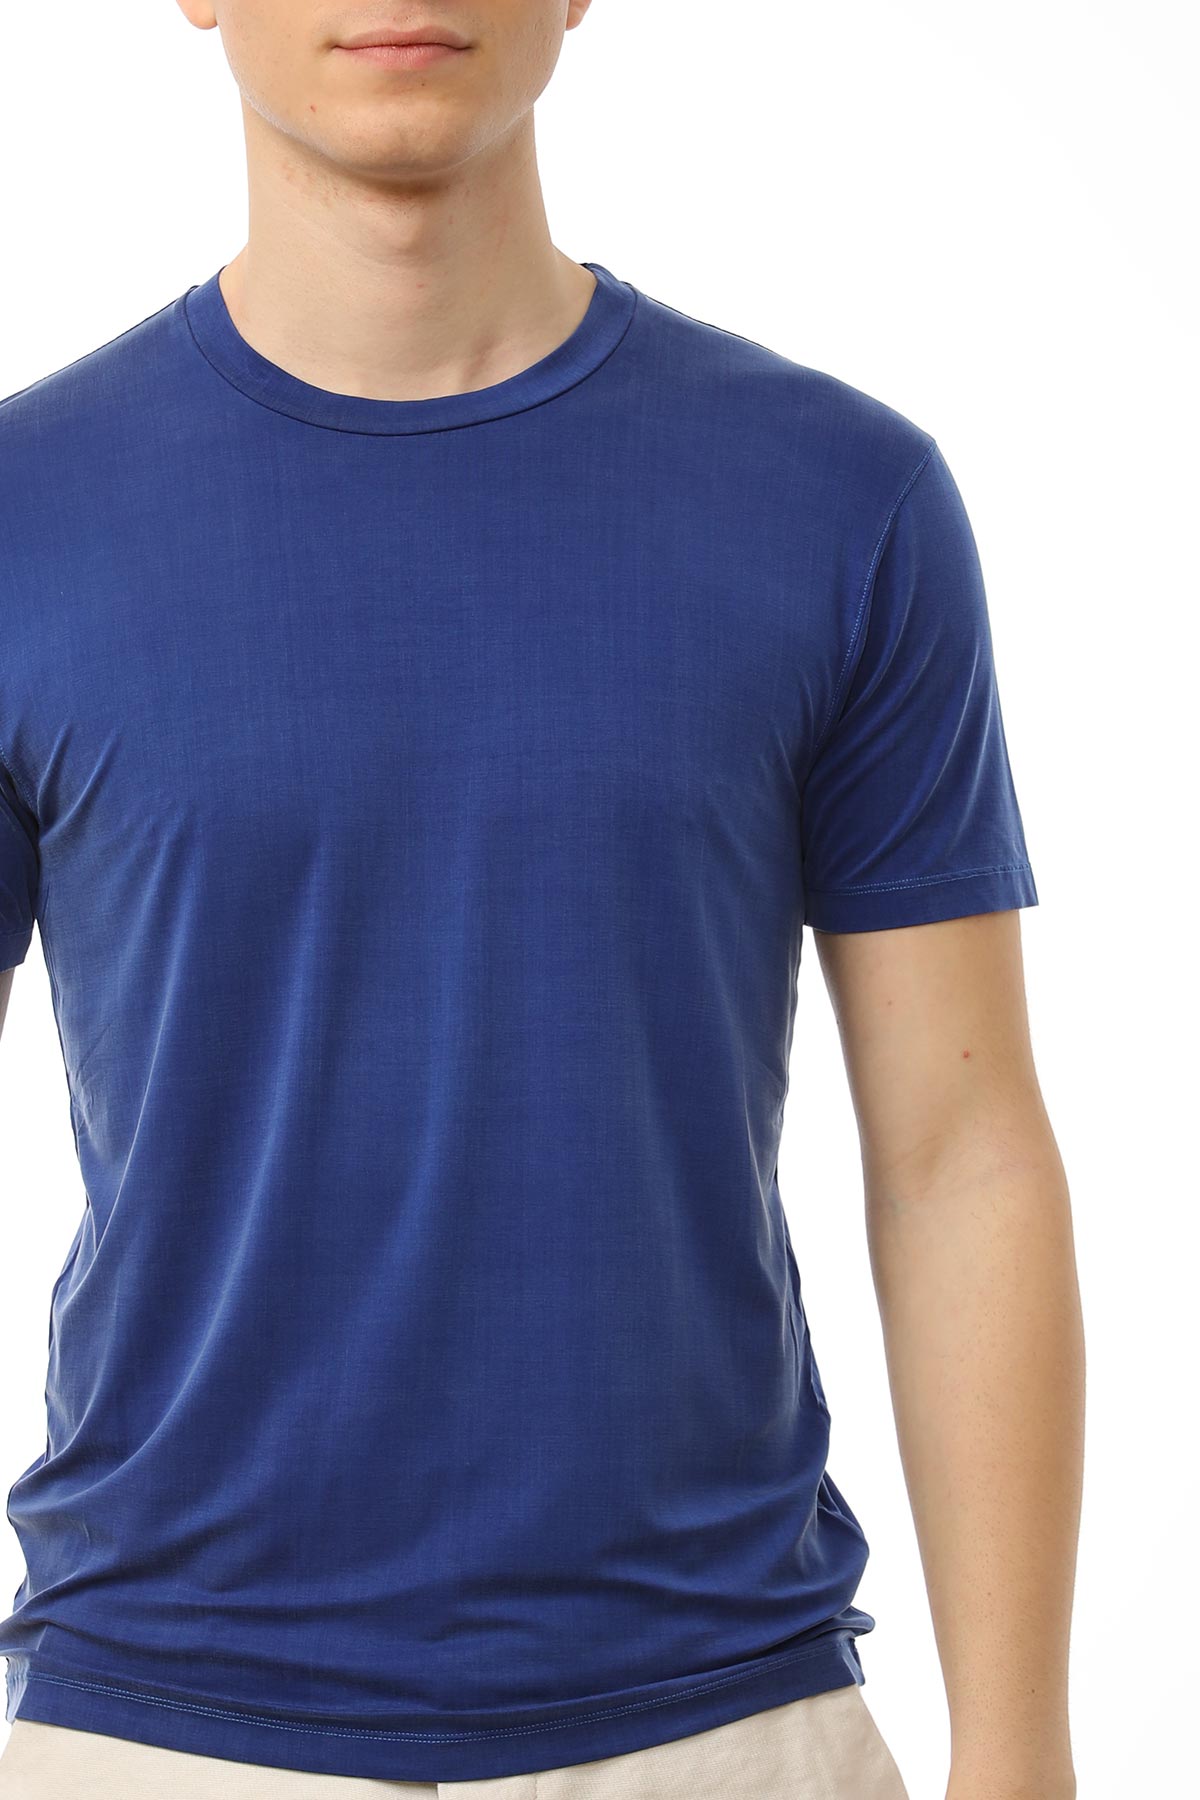 Manifattura T-shirt-Libas Trendy Fashion Store